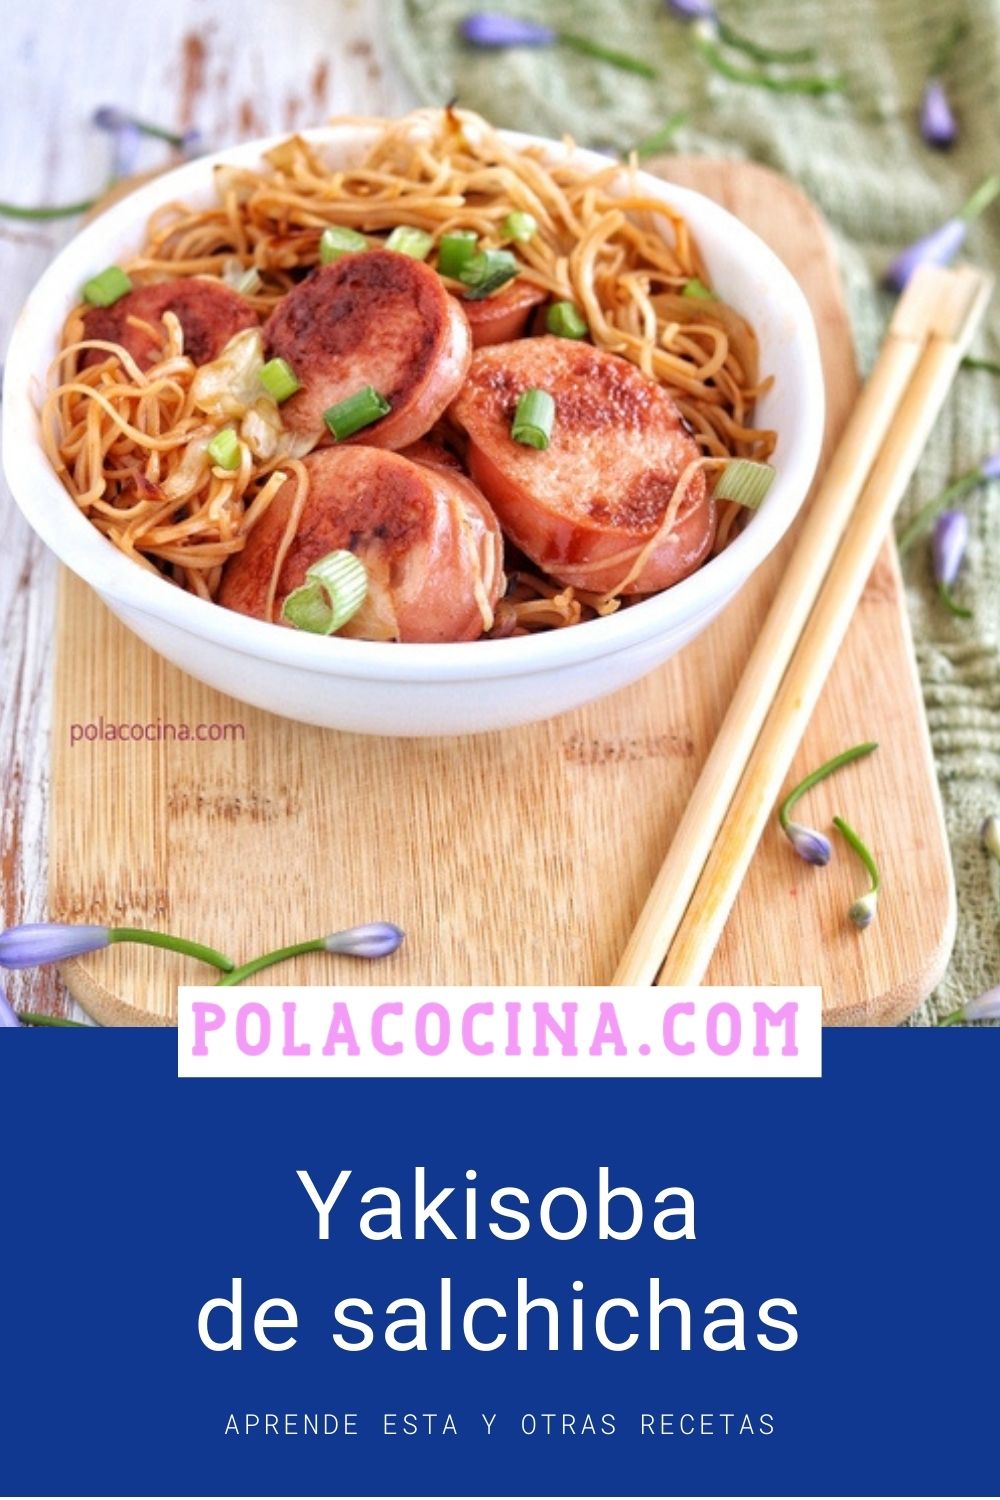 Receta de yakisoba de salchichas o wok de fideos japonés